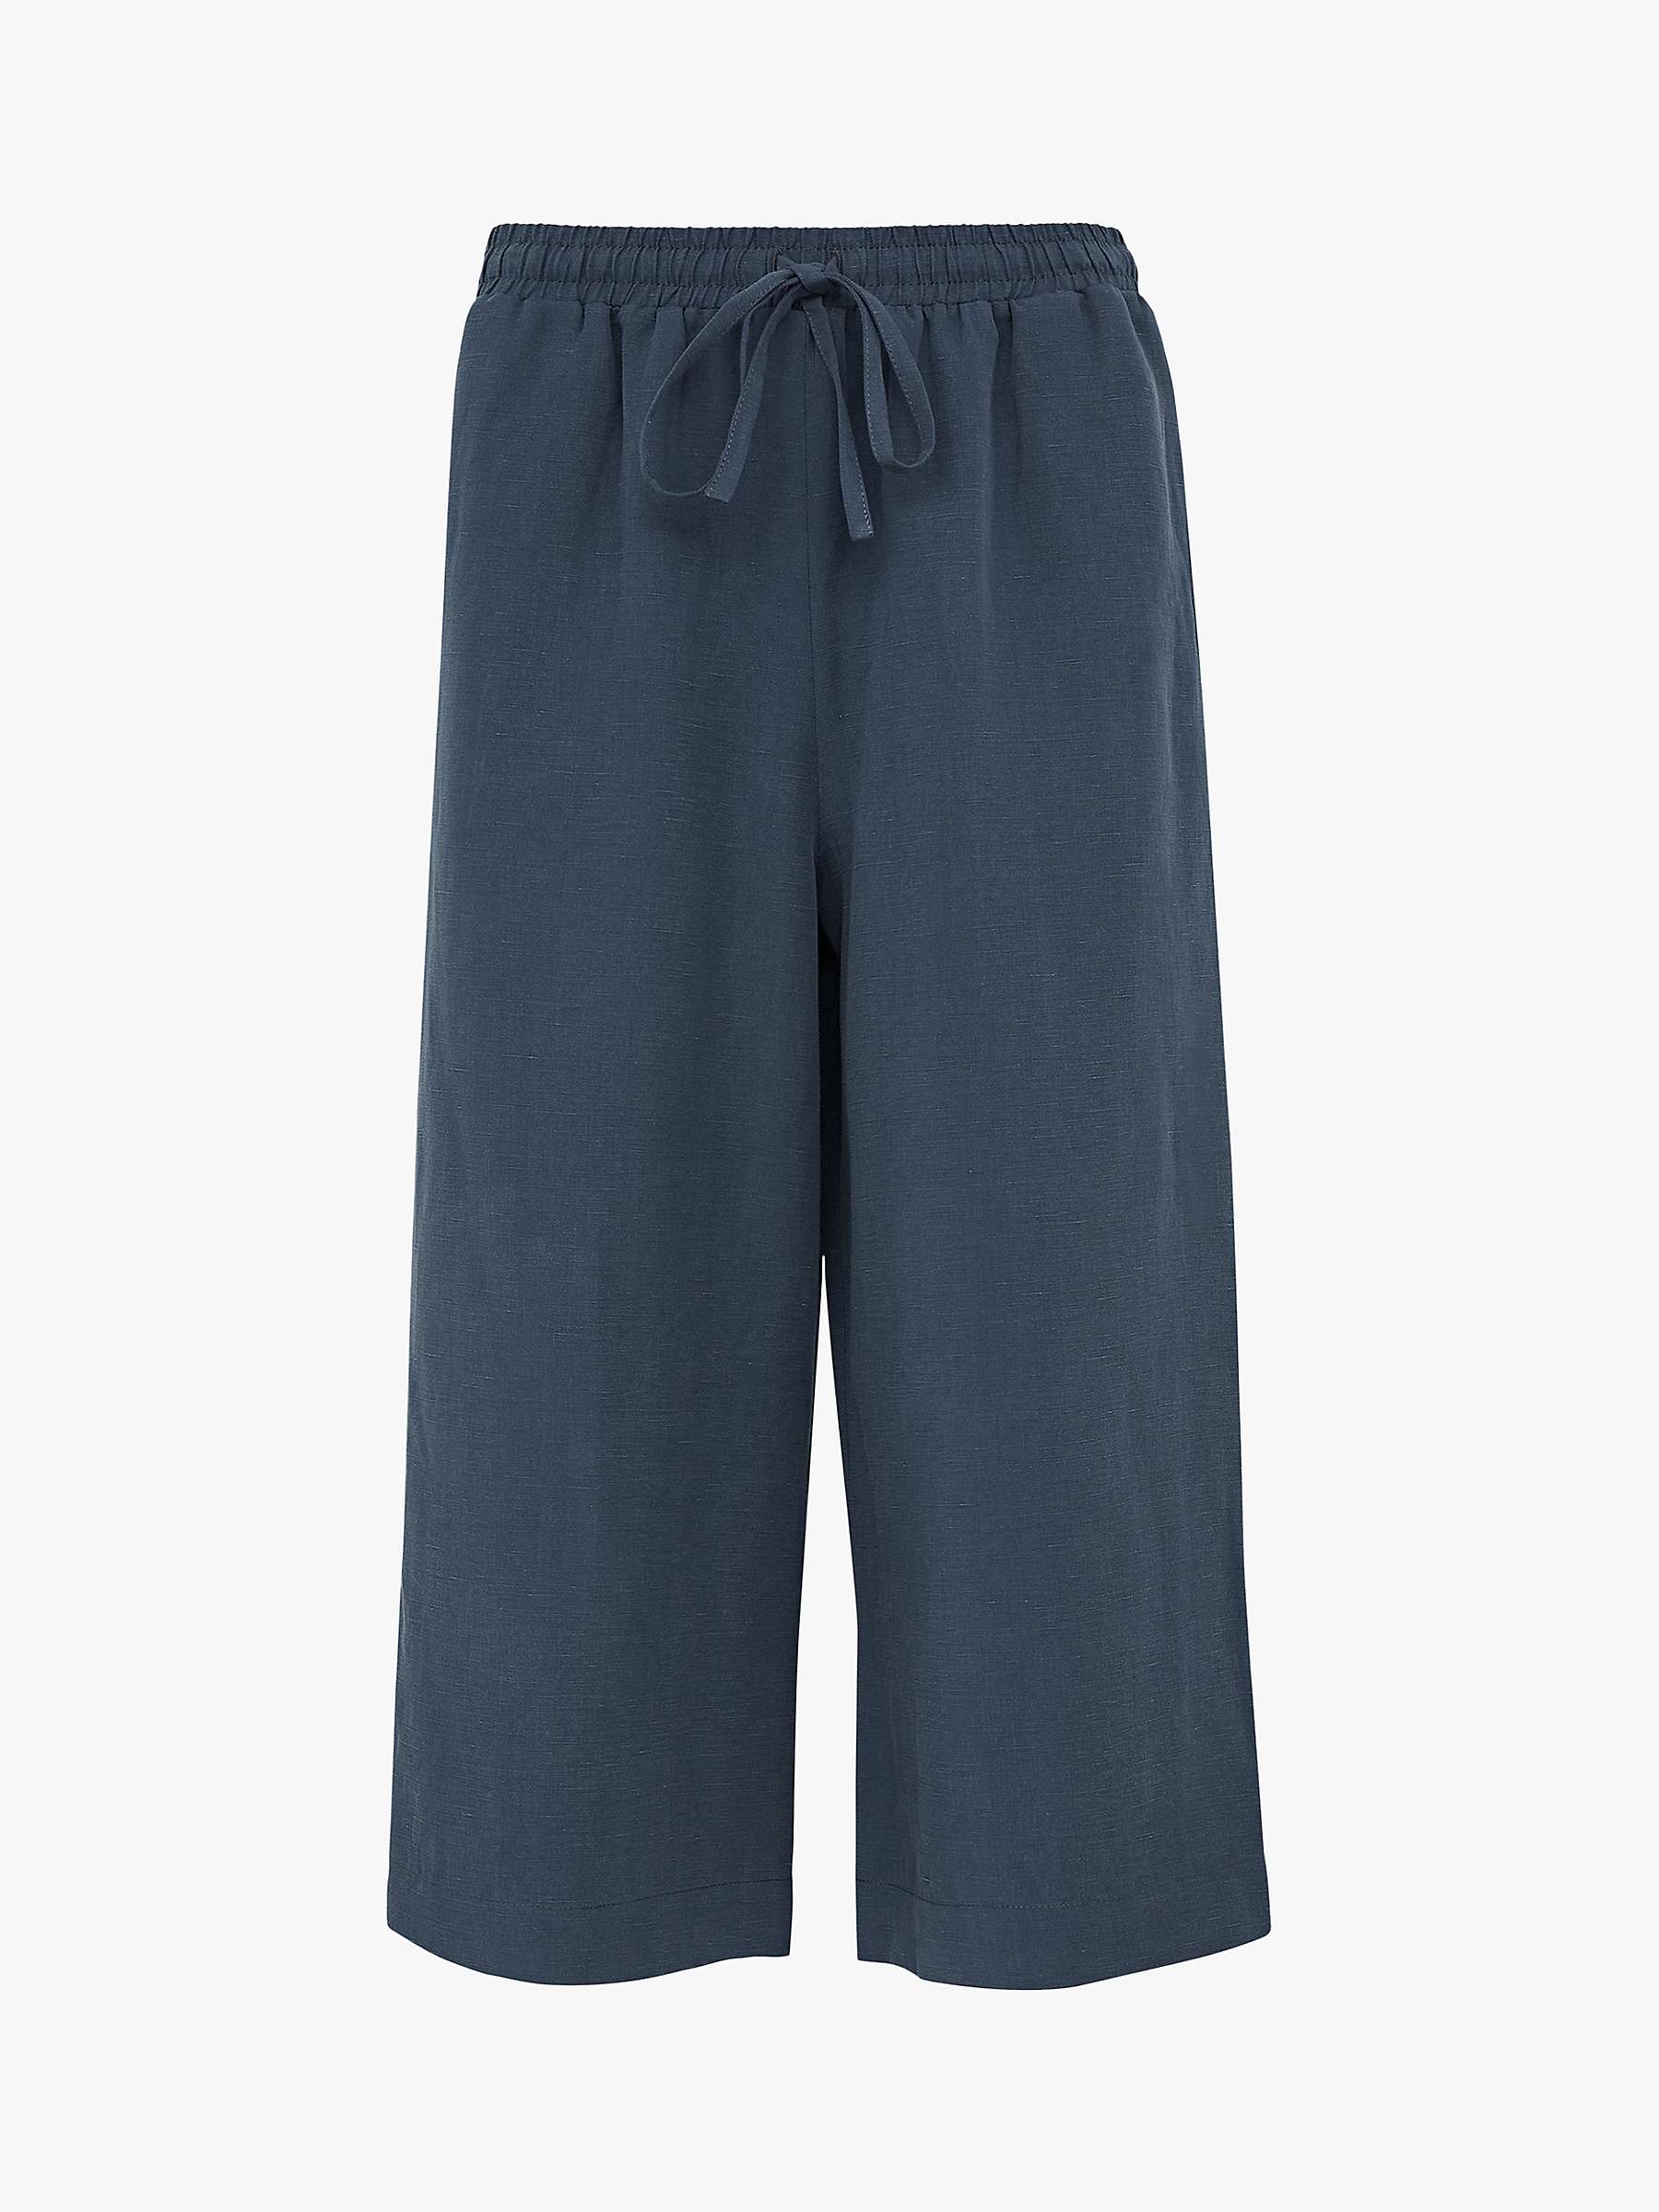 Buy Celtic & Co. Plain Cropped Linen Blend Trousers, Navy Online at johnlewis.com